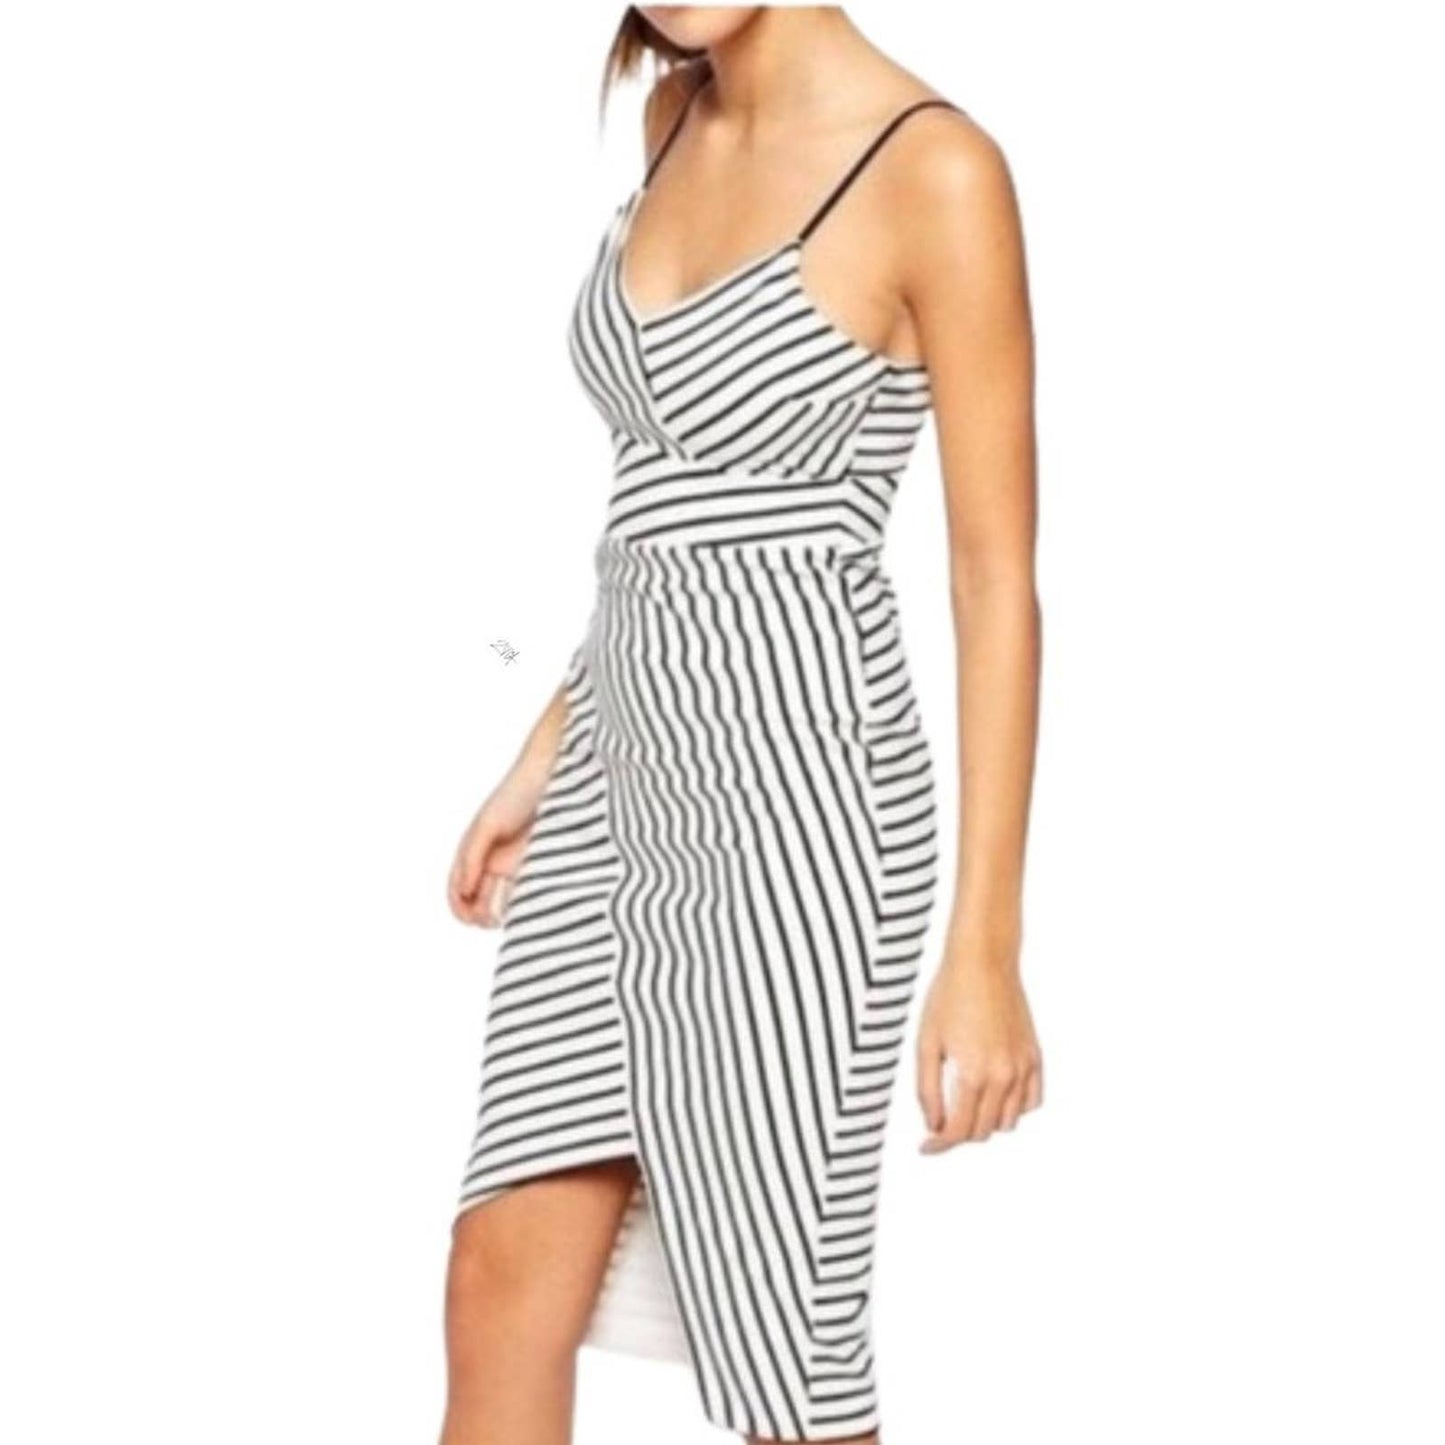 Revolve x Bardot Black and White Stripe Asymmetrical Stretch Sheath Dress Size 4